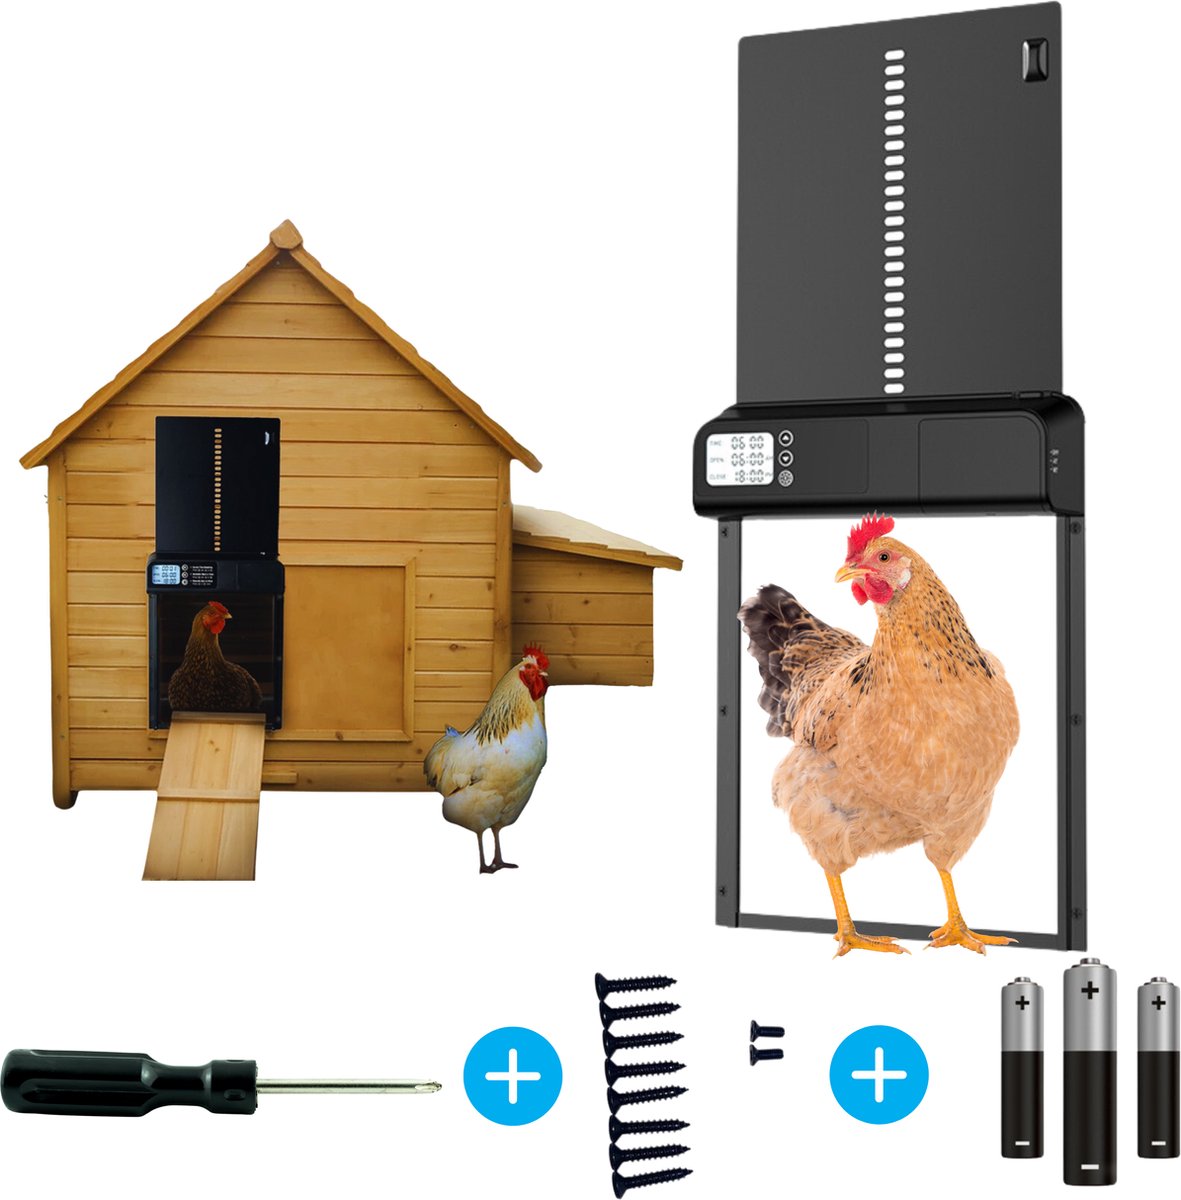 Kippenluik Automatisch Incl. 3 Batterijen Timer en Montage Set -  Chickenguard 